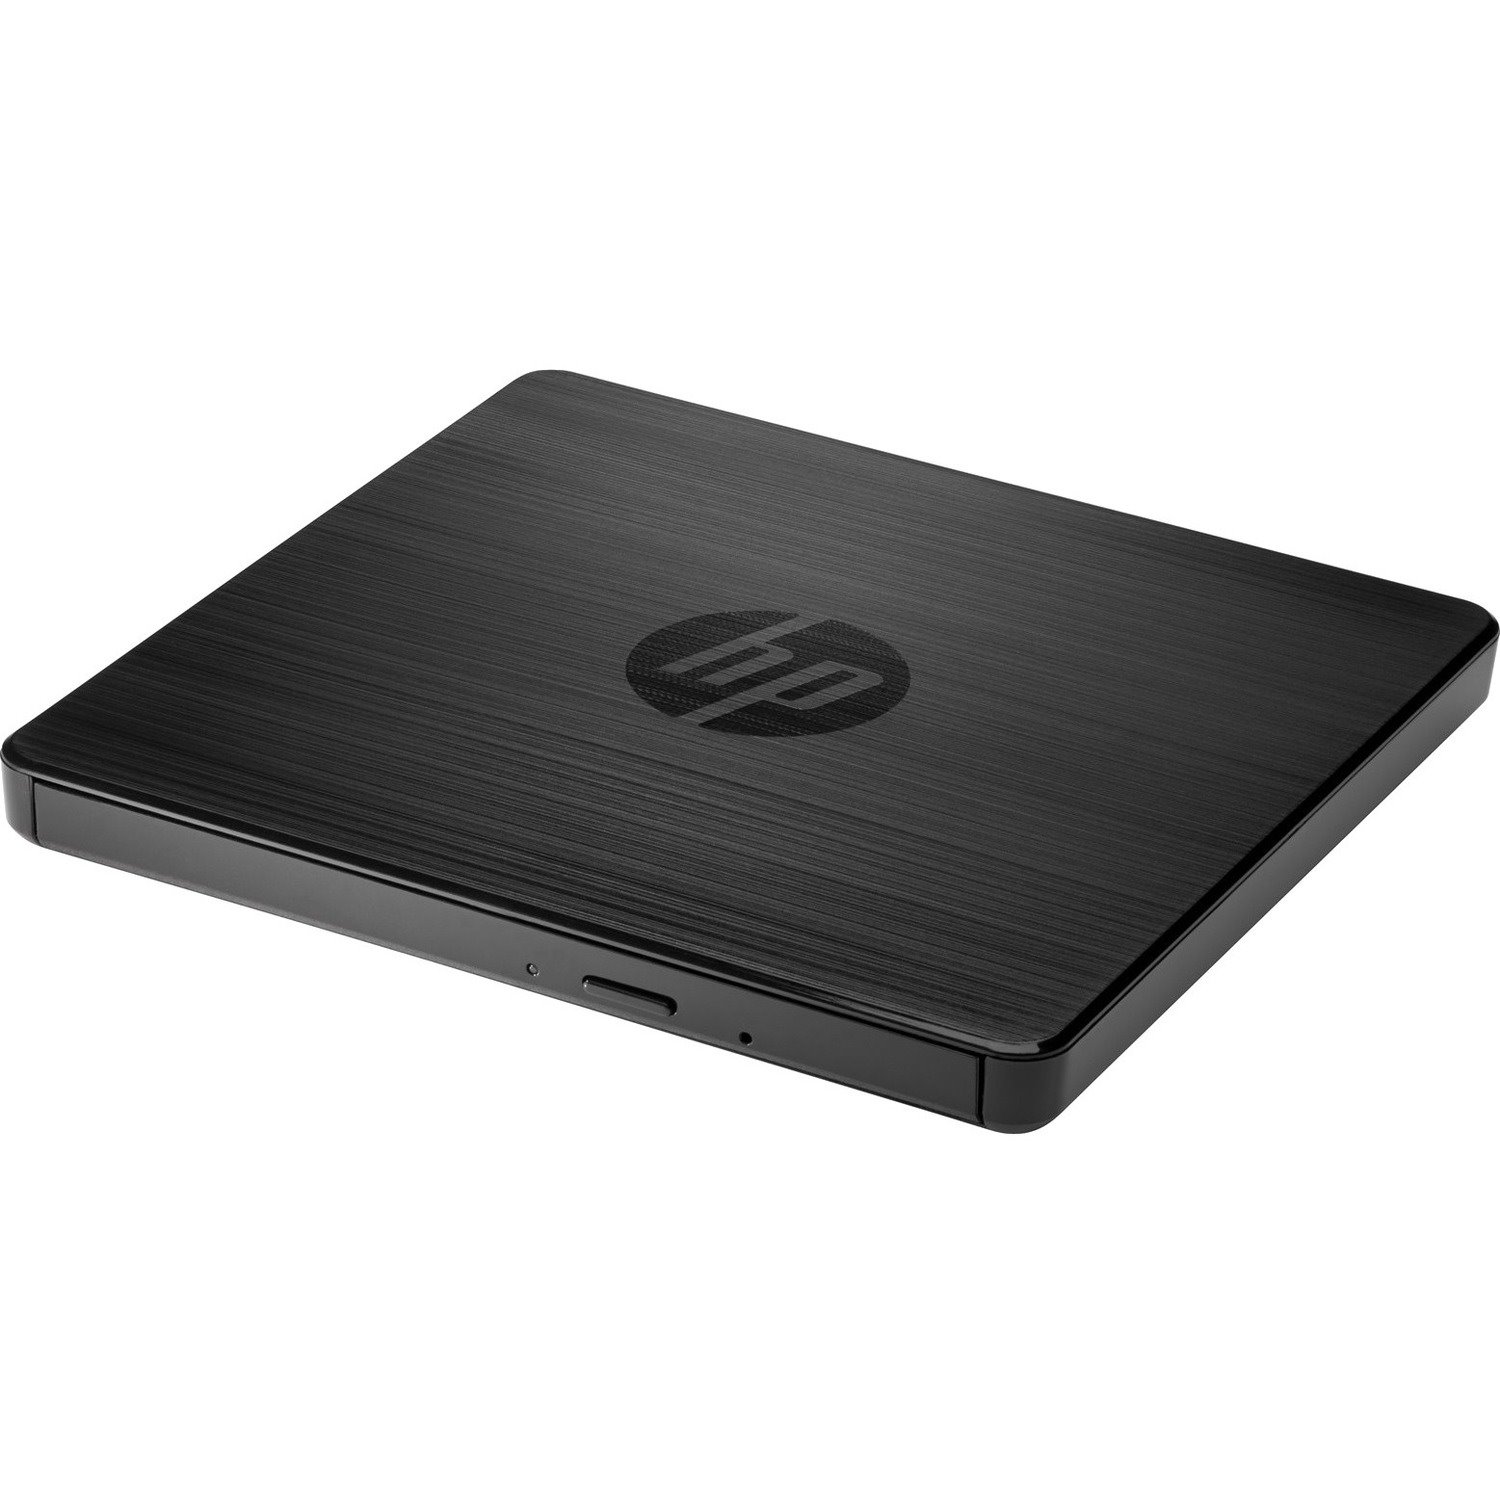 HP DVD-Writer - External - Black